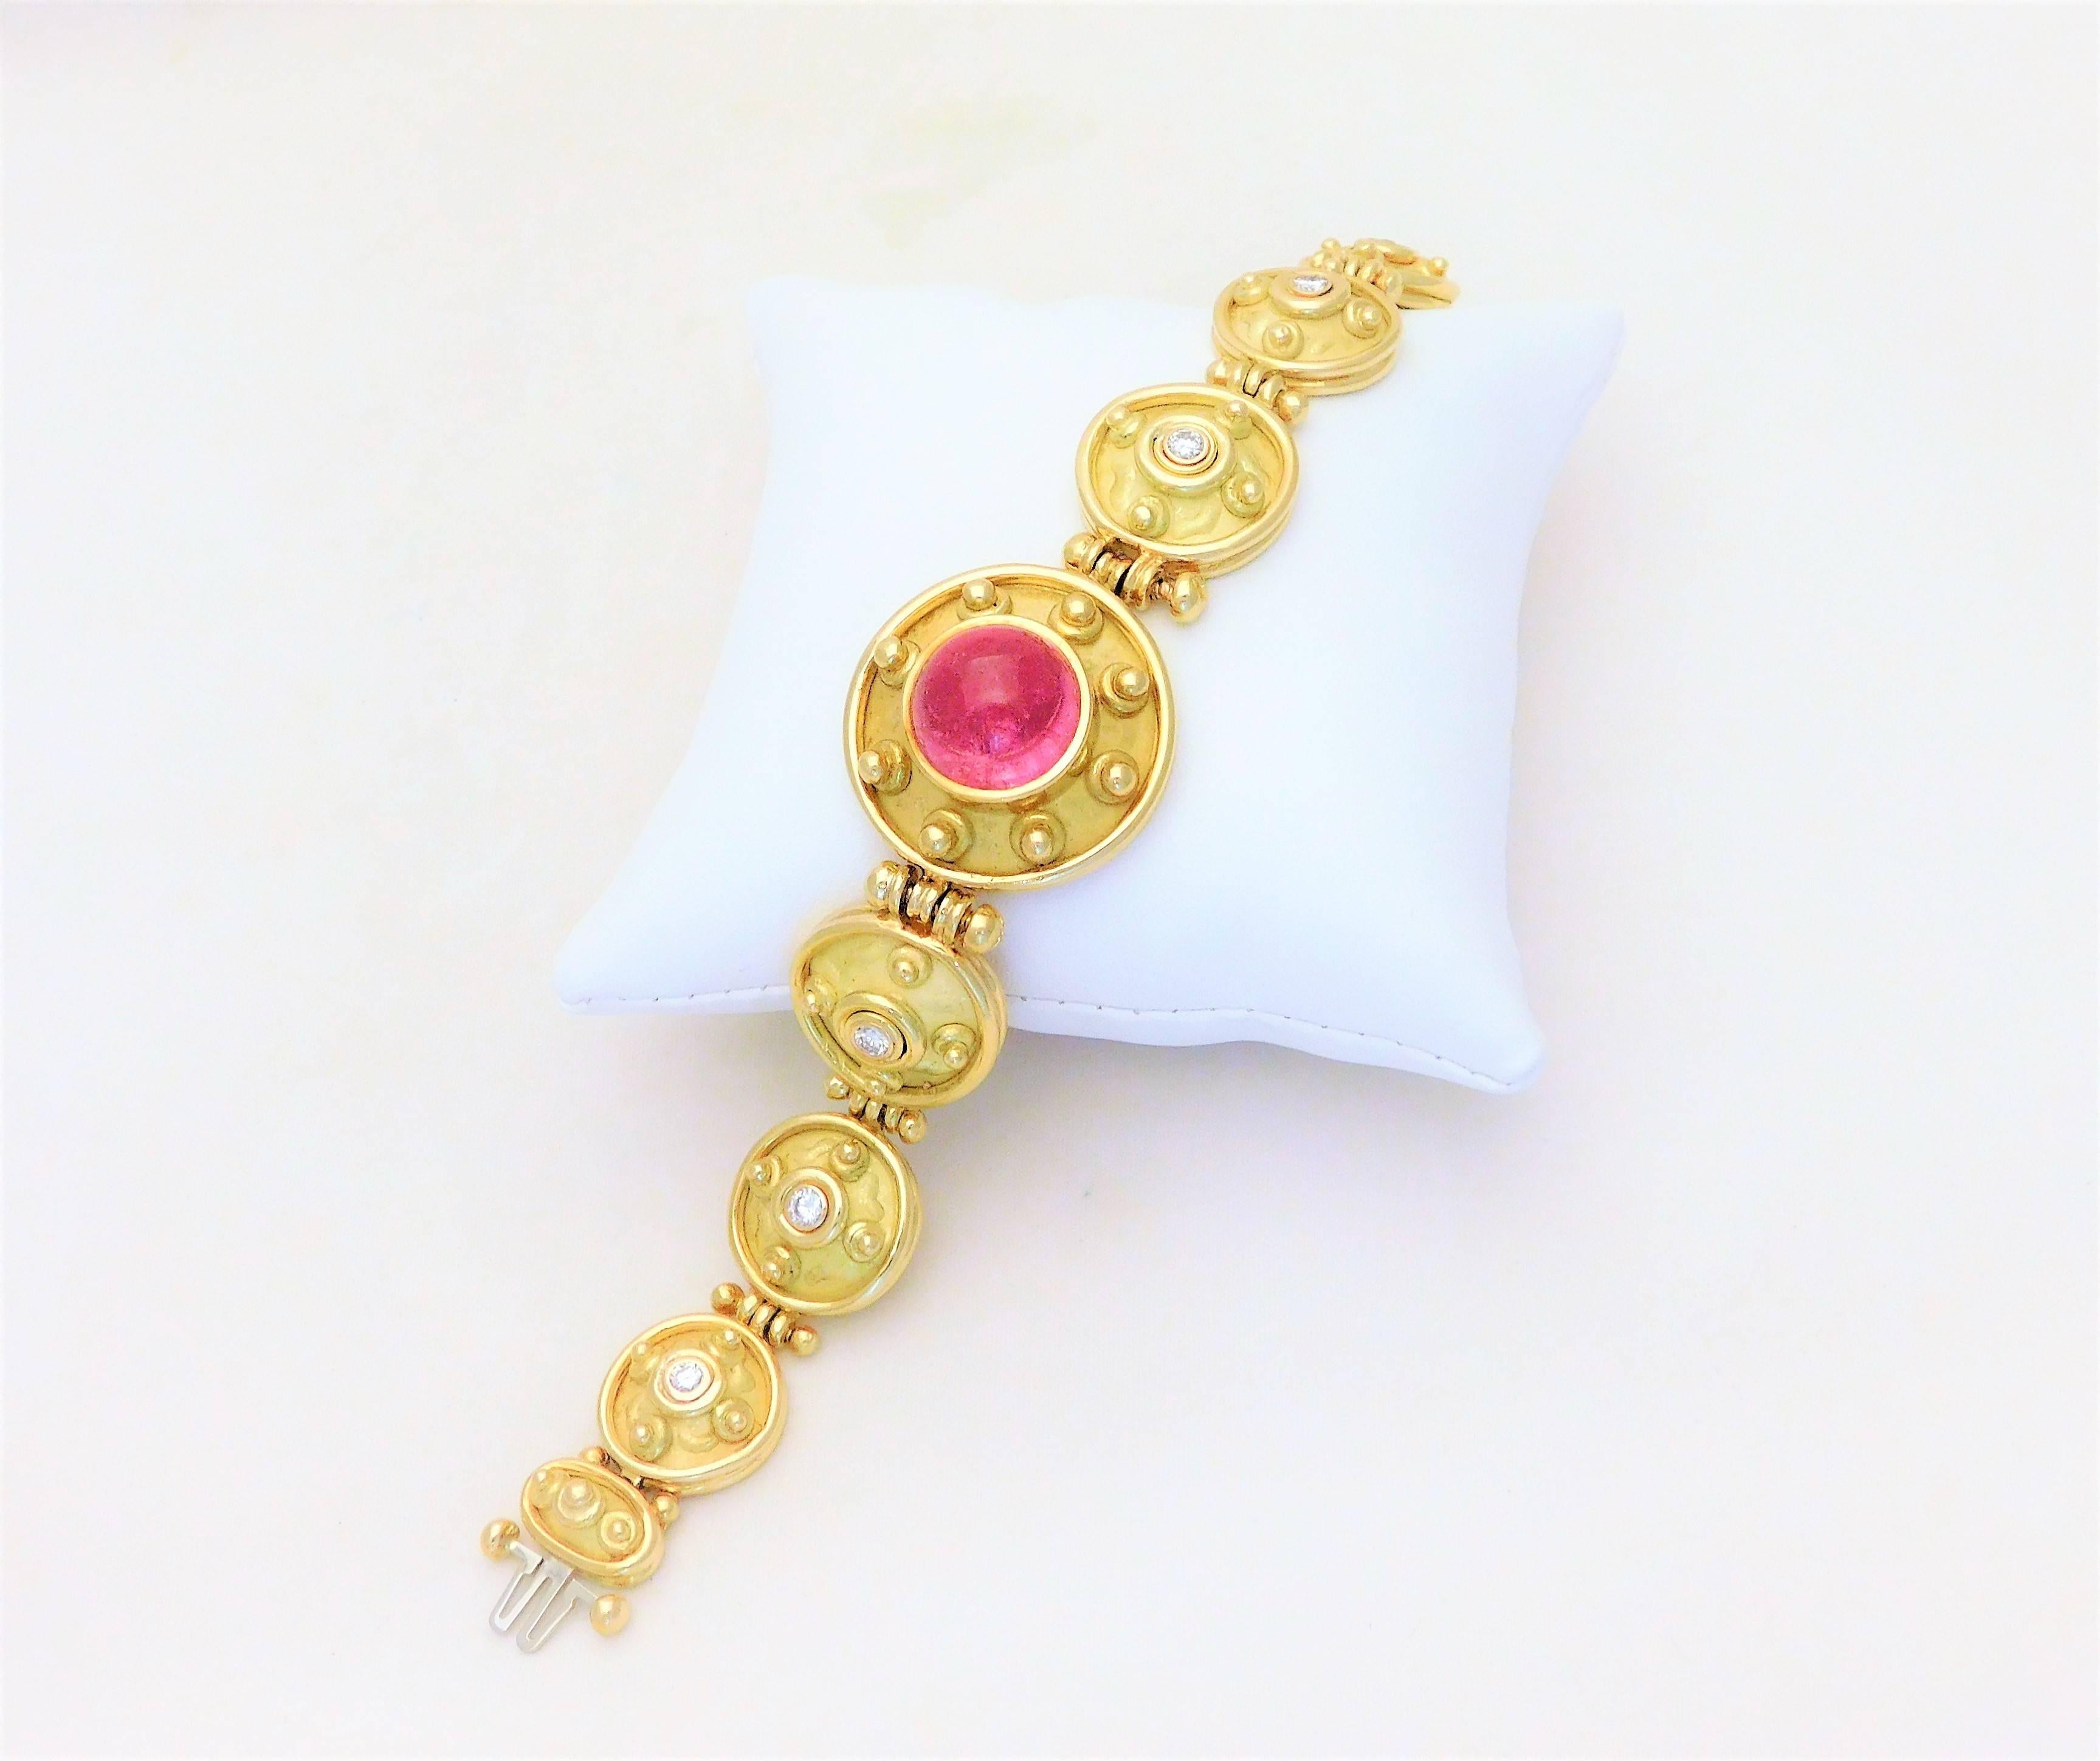 Denise Roberge 18 Karat Pink Tourmaline and Diamond Bracelet For Sale 7